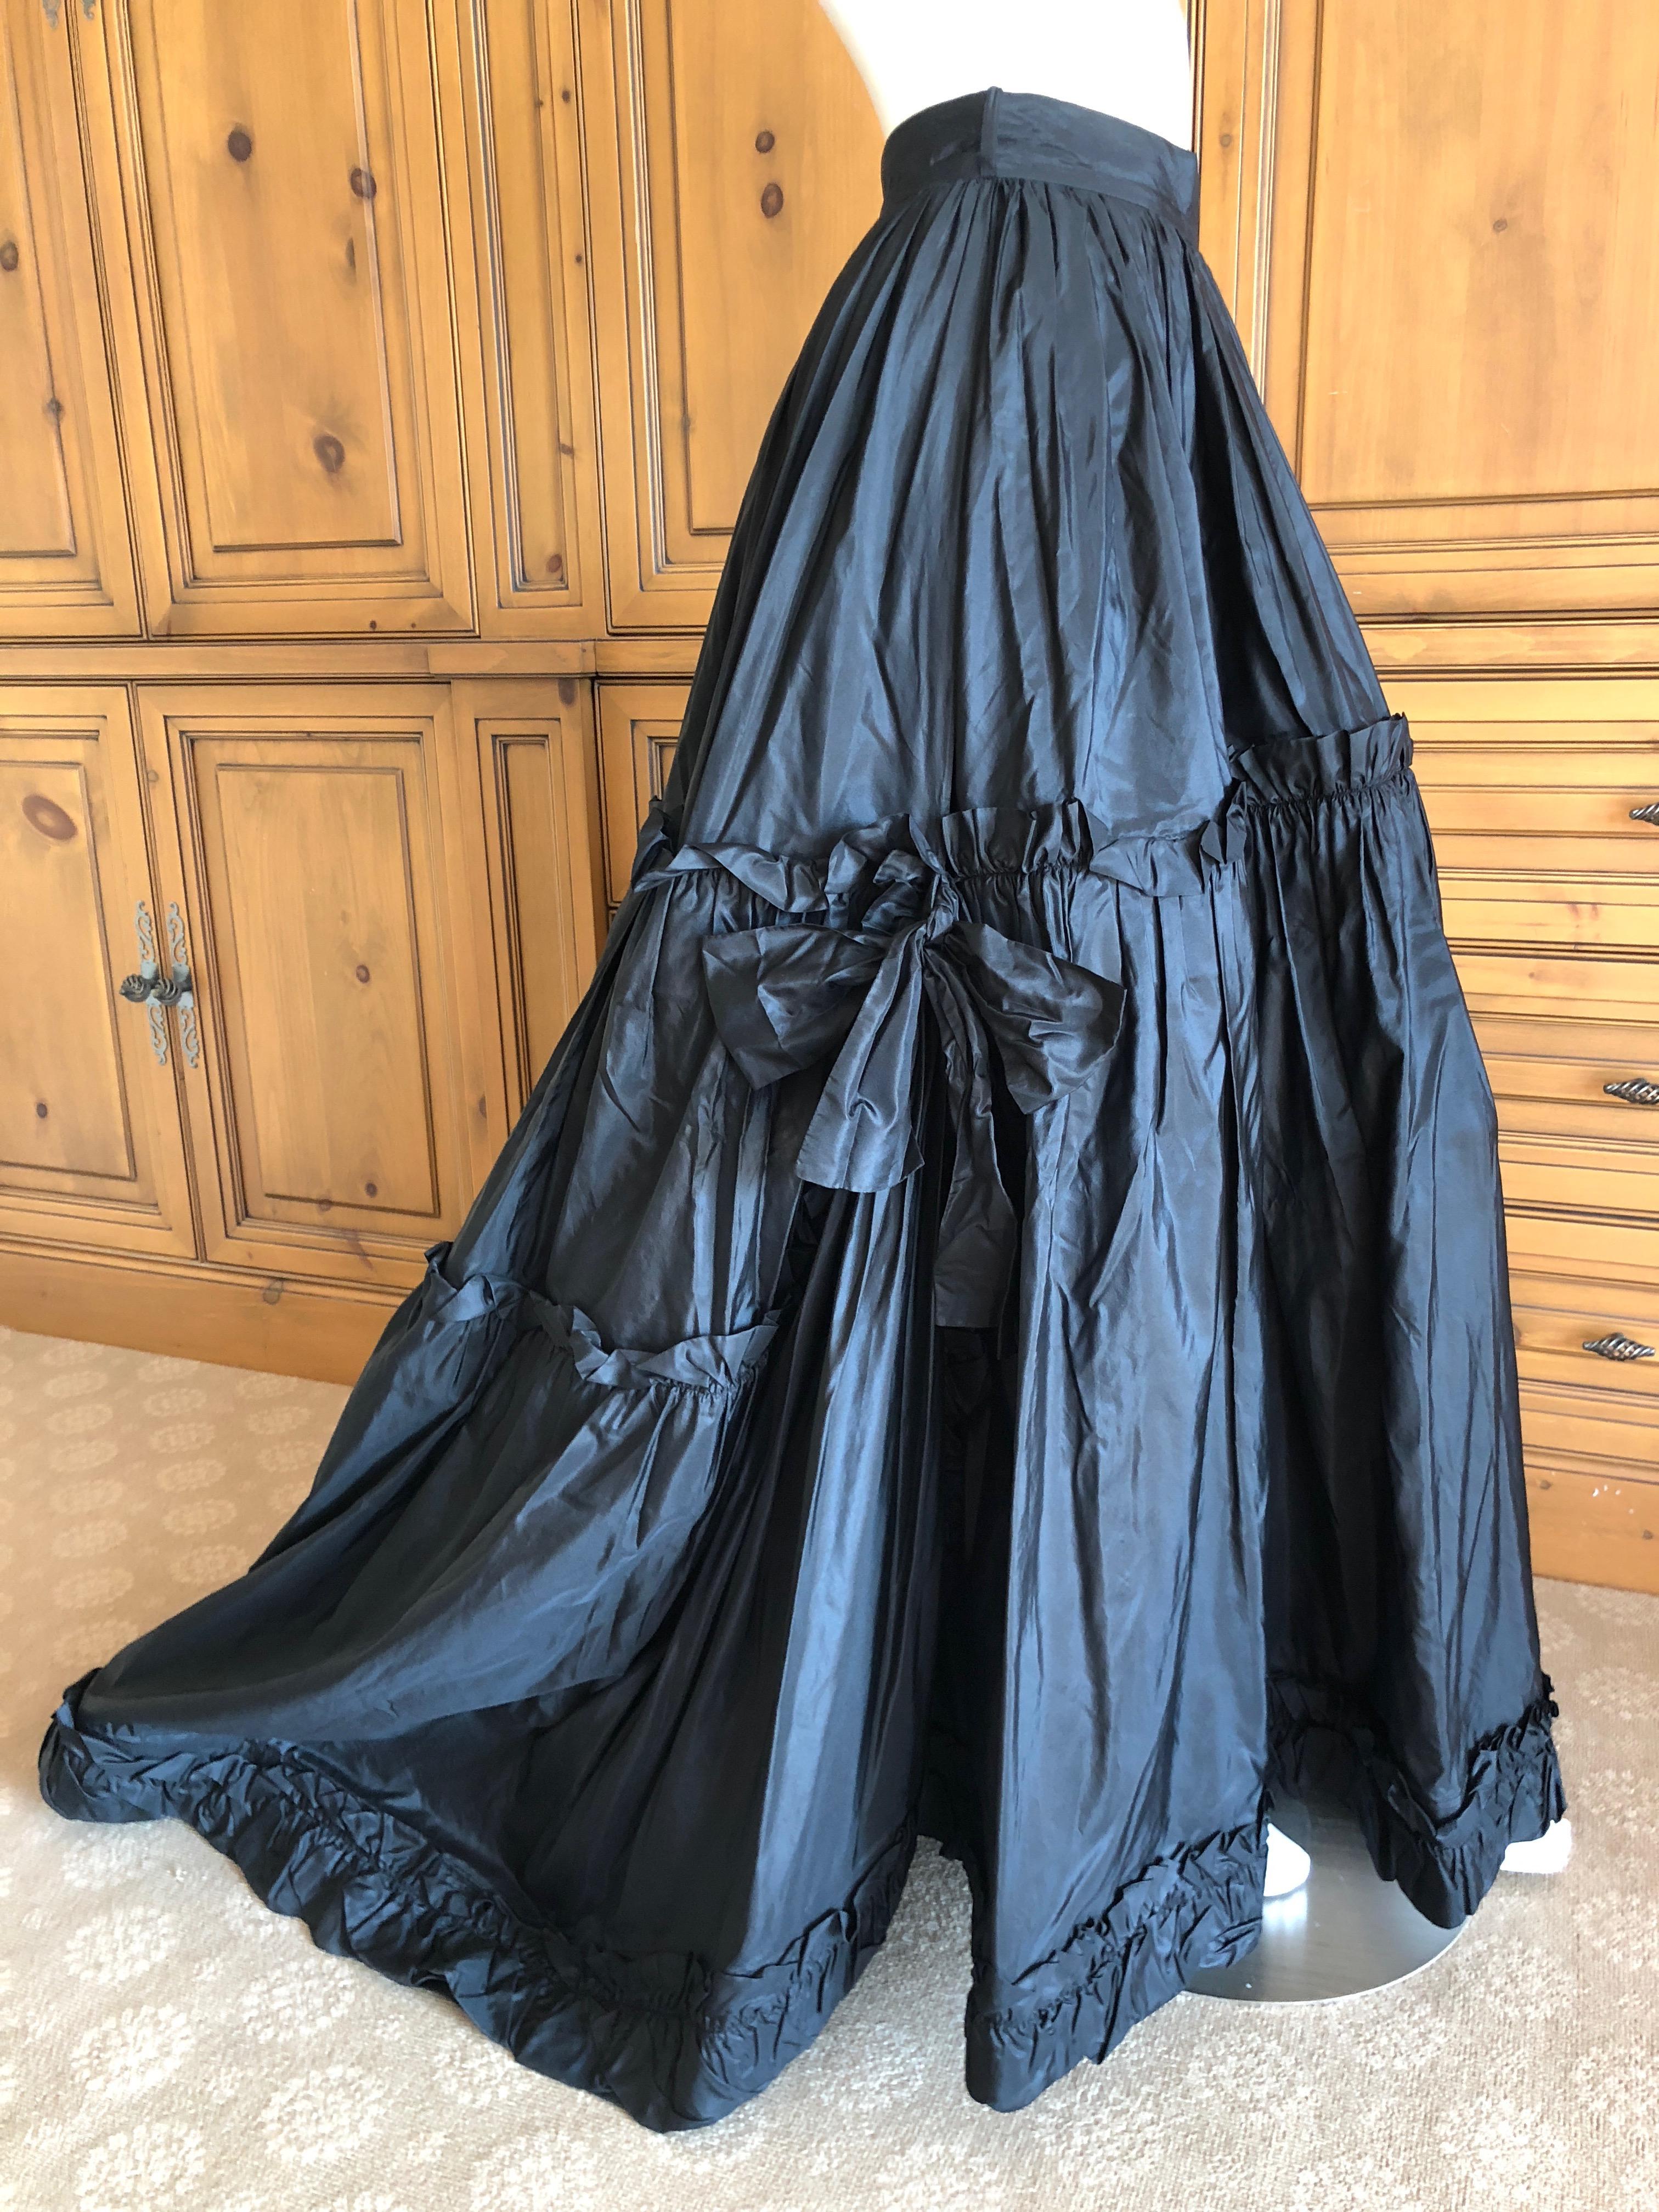 Yves Saint Laurent Rive Guache 1982 Dramatic Black Taffeta Ball Skirt with Train For Sale 8